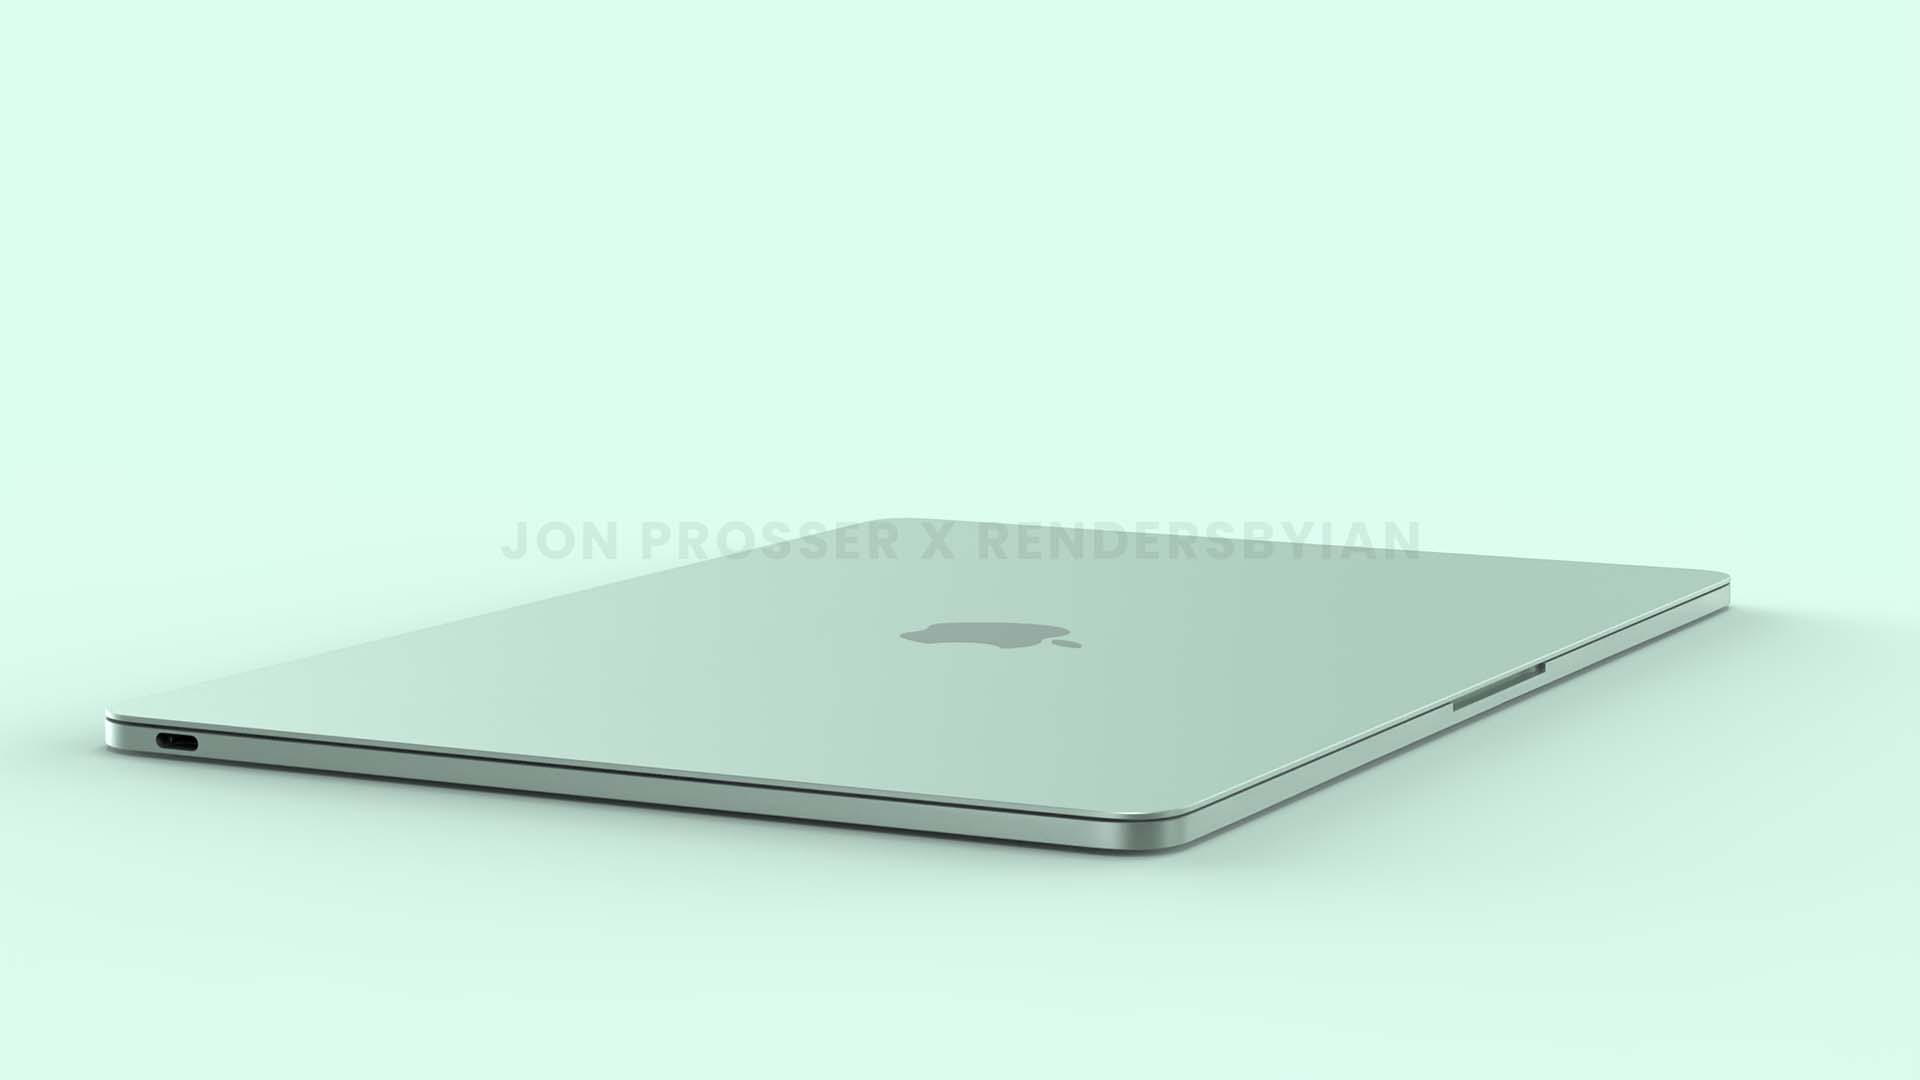 Appleosophy | More Details Rumored for Next MacBook Air